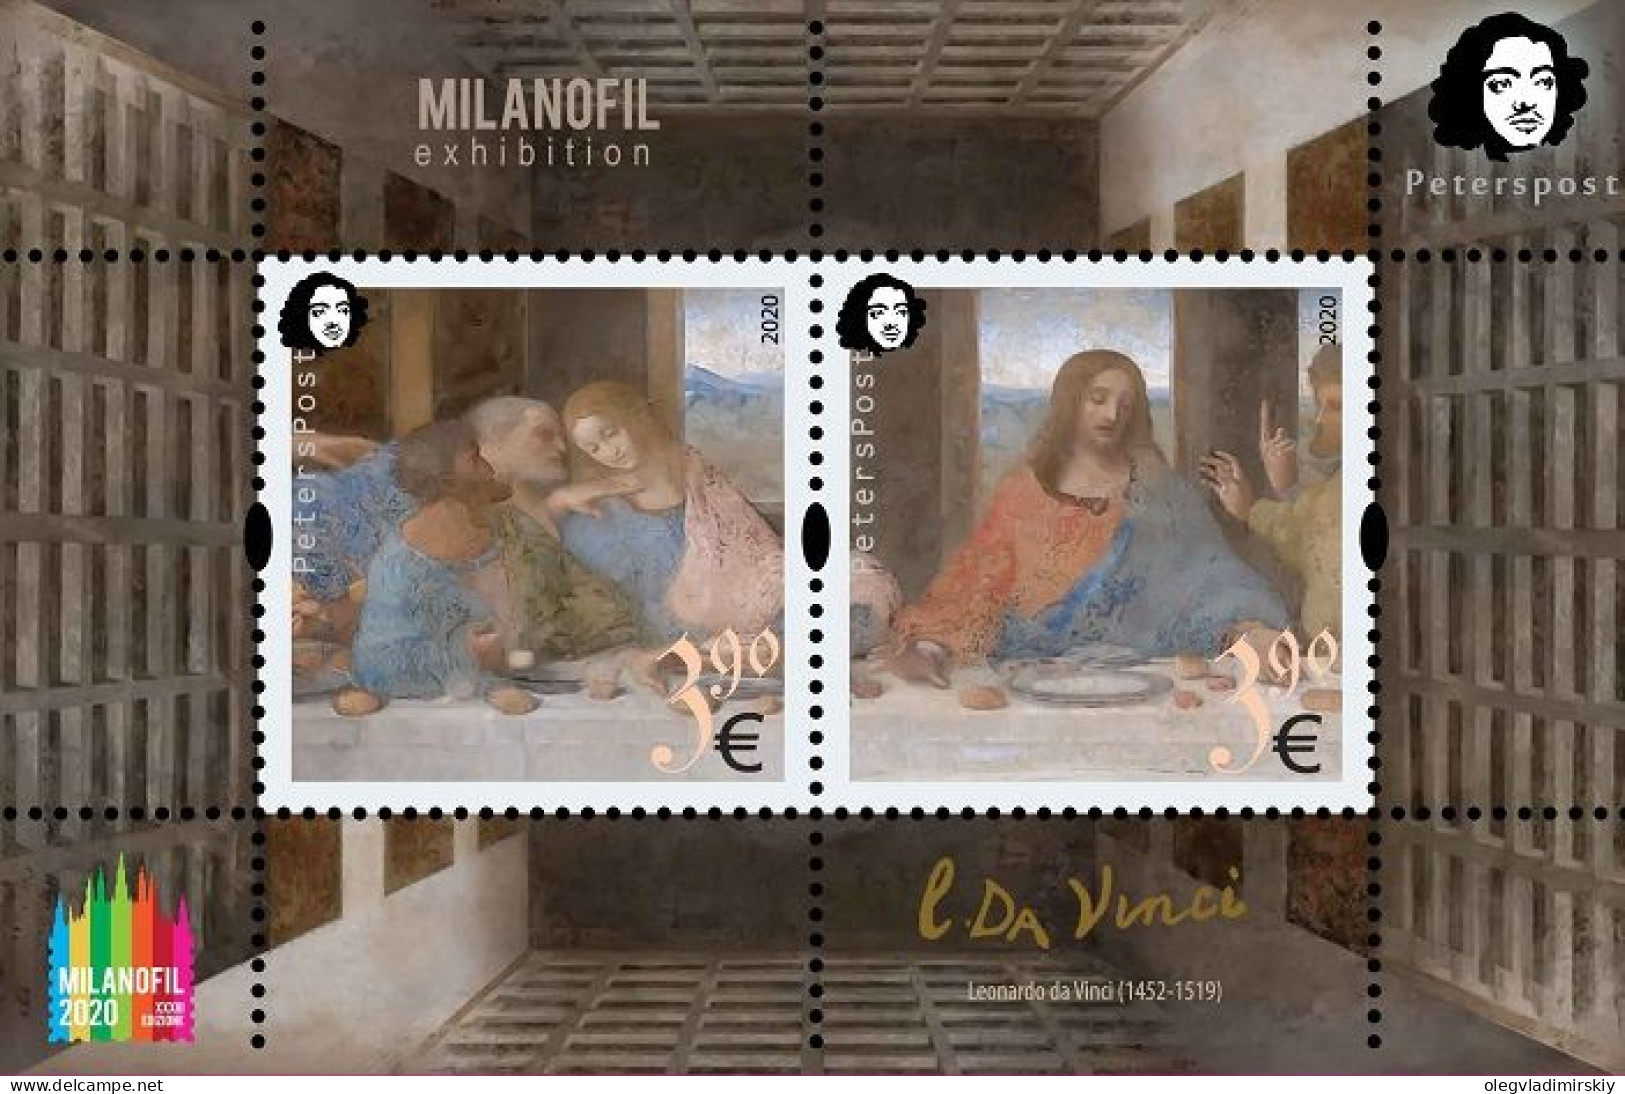 Finland 2020 Leonardo Da Vinci 500 Years From The Date Of Death "The Lord's Supper" MILANOFIL-2020 Peterspost Block MNH - Blokken & Velletjes